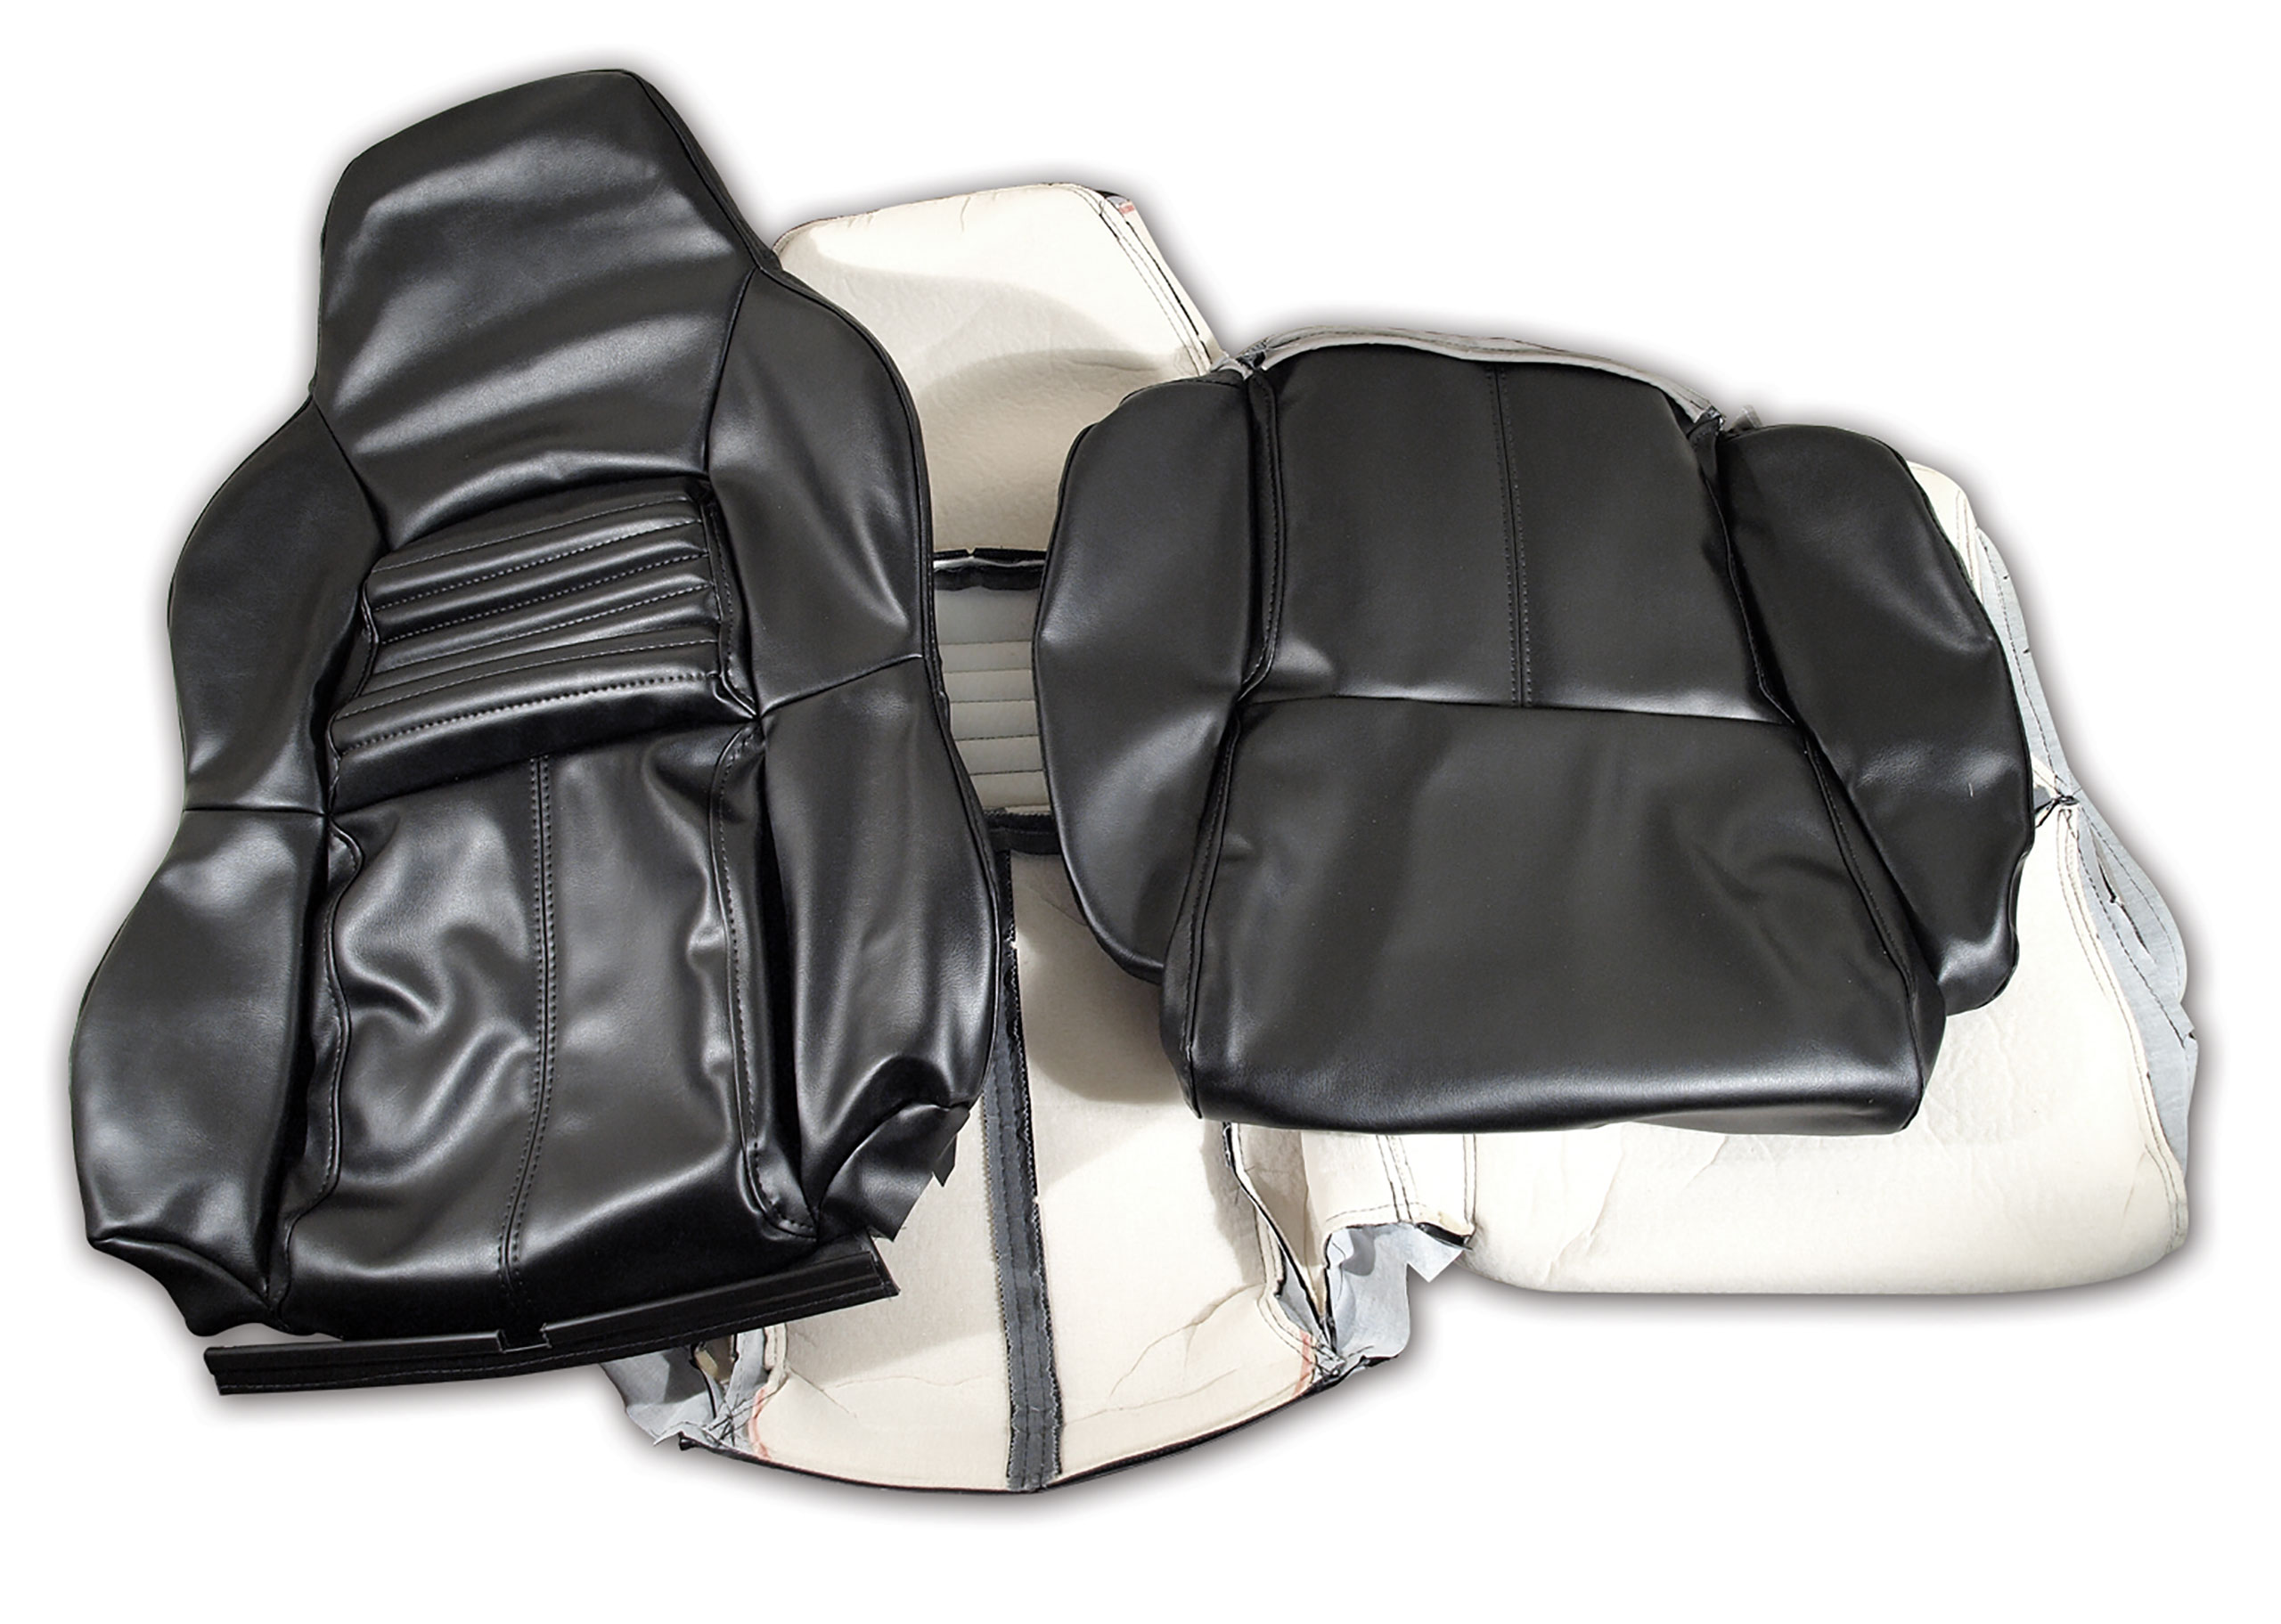 1994-1996 Corvette C4 "Leather-Like" Vinyl Seat Covers Black Standard CA-447320 